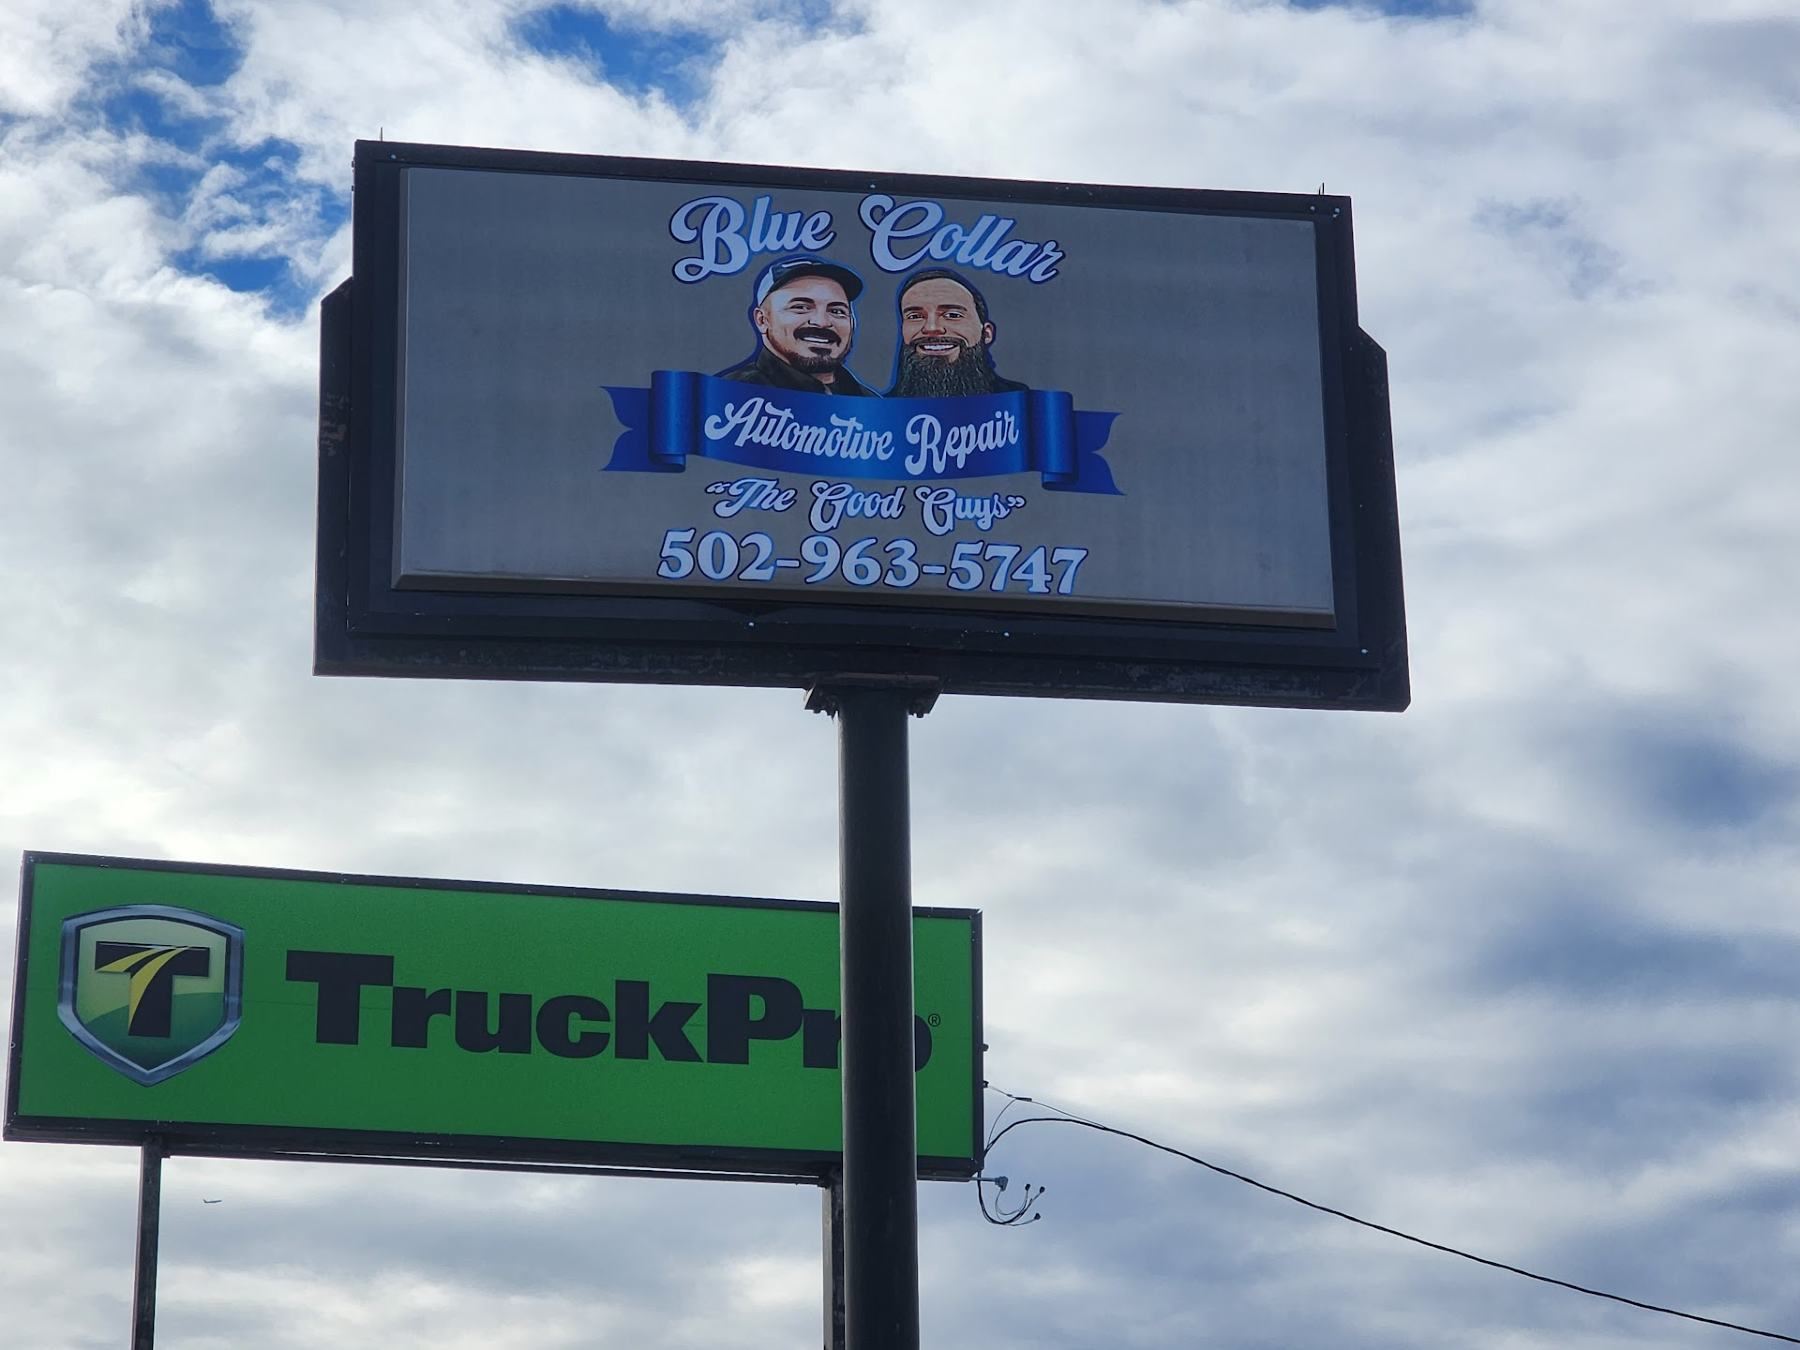 Billboard with the Blue Collar logo